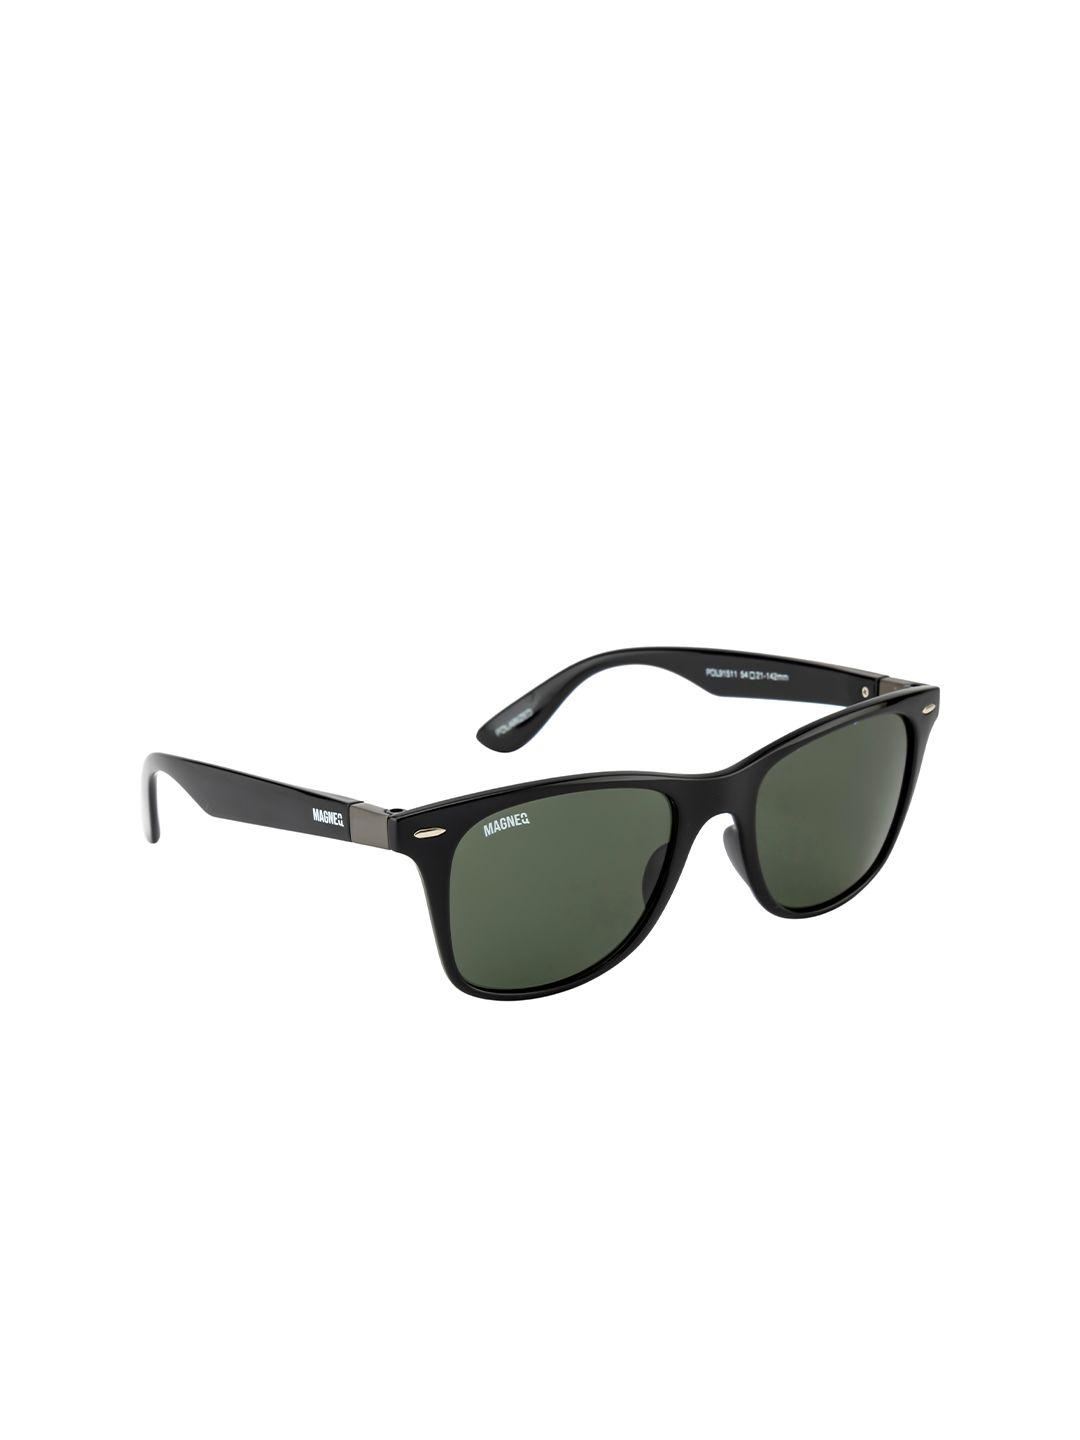 magneq lens & wayfarer sunglasses with polarised & uv protected lens mg 91511/s c3 5421